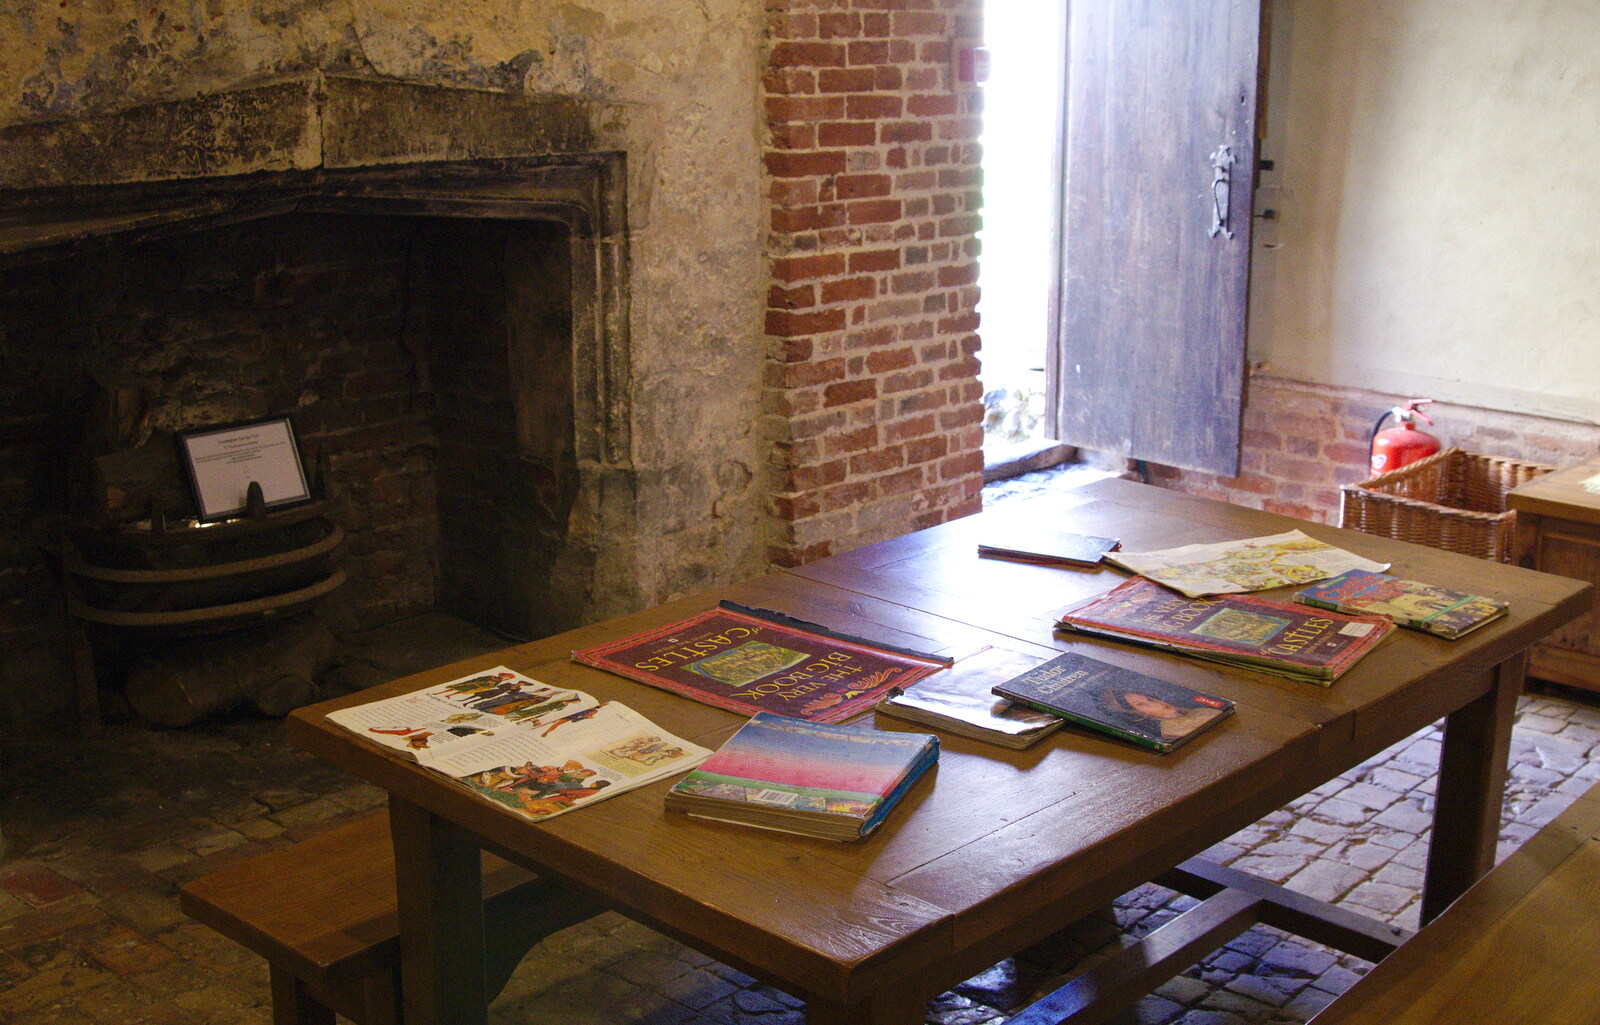 A table full of books from A Trip to Framlingham Castle, Framlingham, Suffolk - 16th February 2014